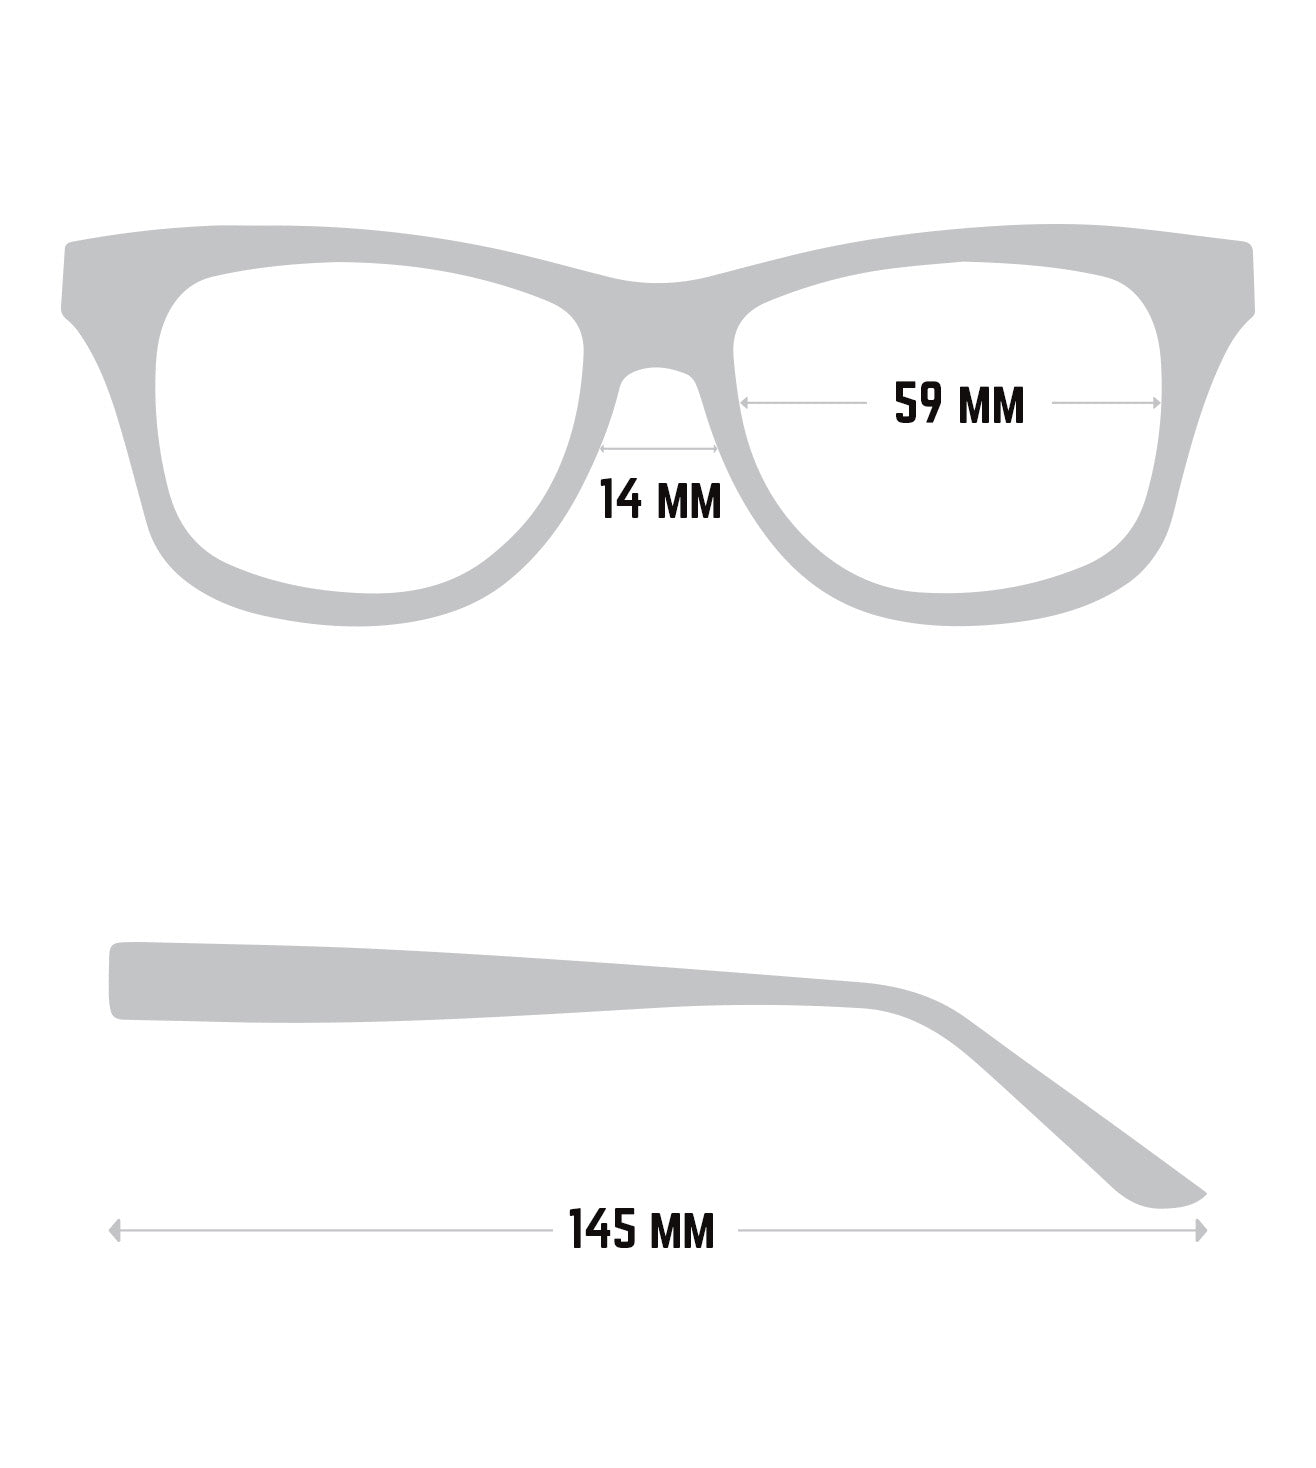 Tommy Hilfiger Men's Grey Rectangular Sunglasses